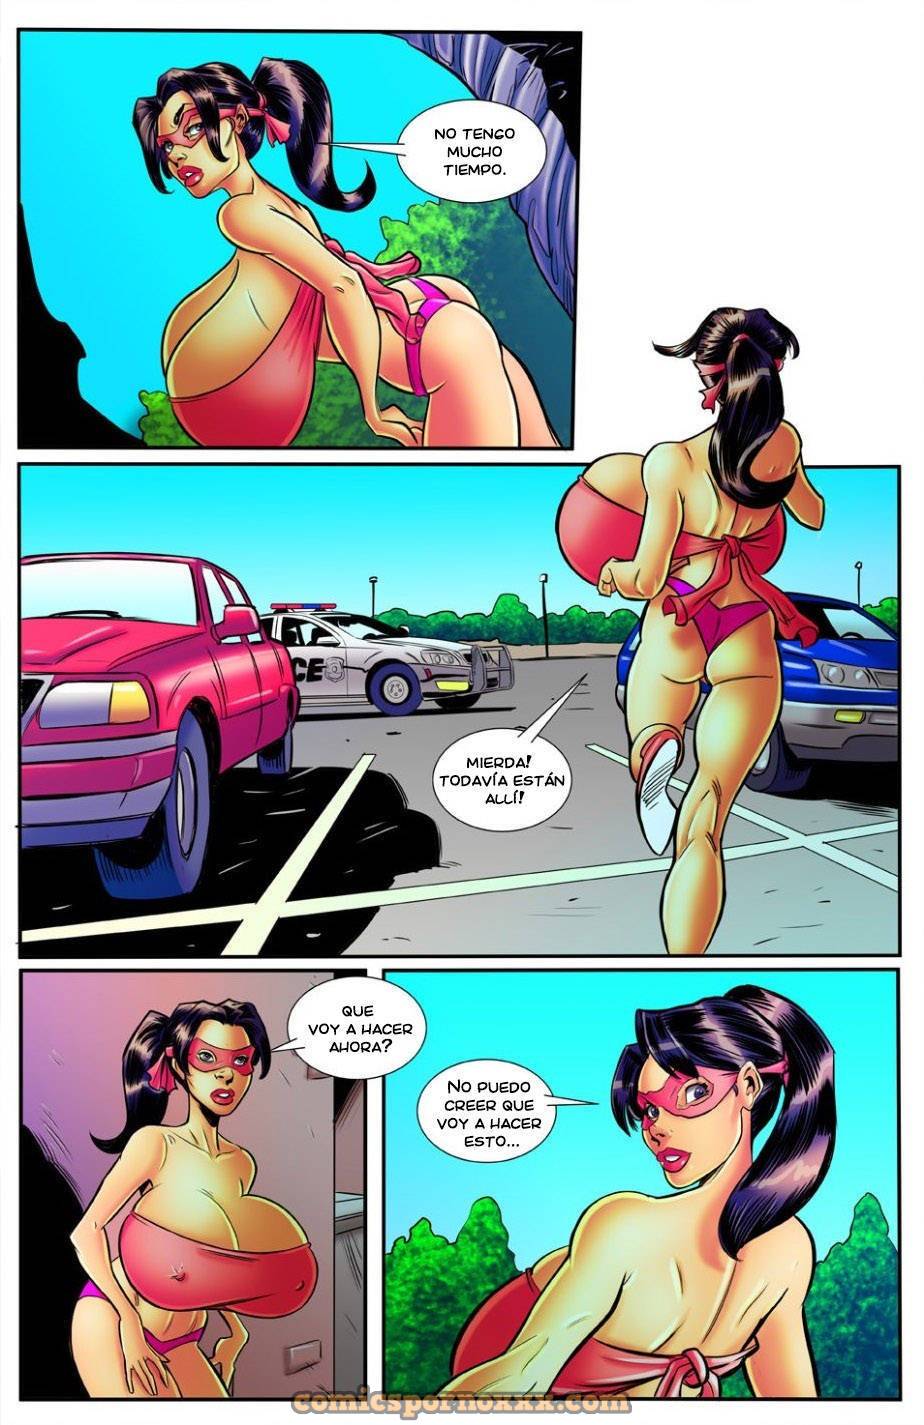 Super BEro: Rising #3 - 2 - Comics Porno - Hentai Manga - Cartoon XXX